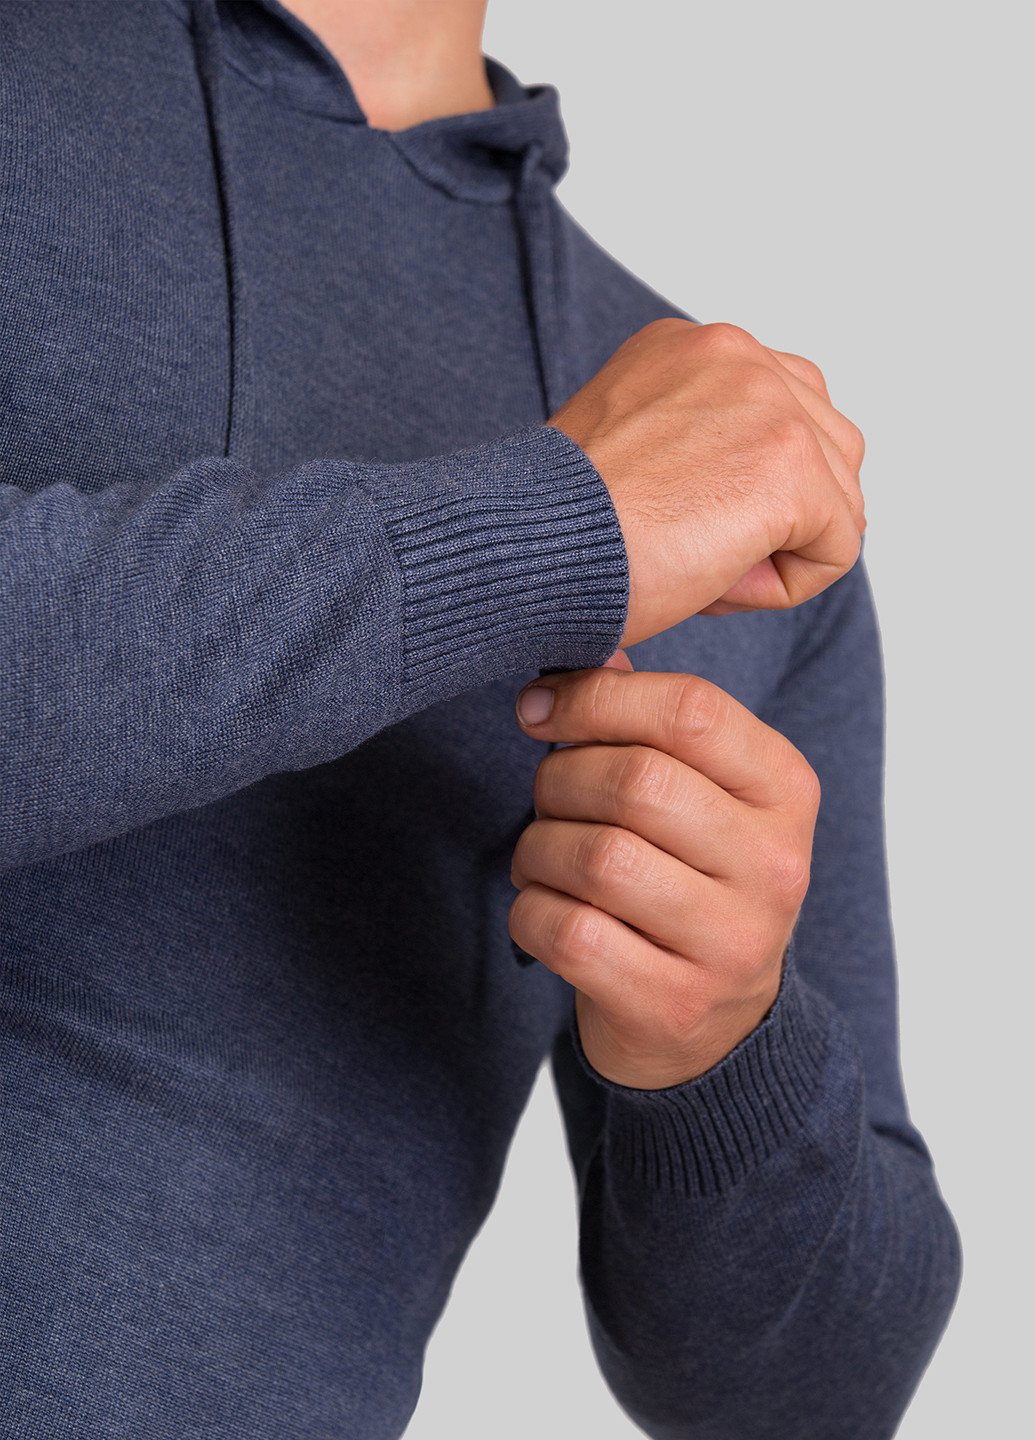 Серо-синий демисезонный свитер Trend Collection